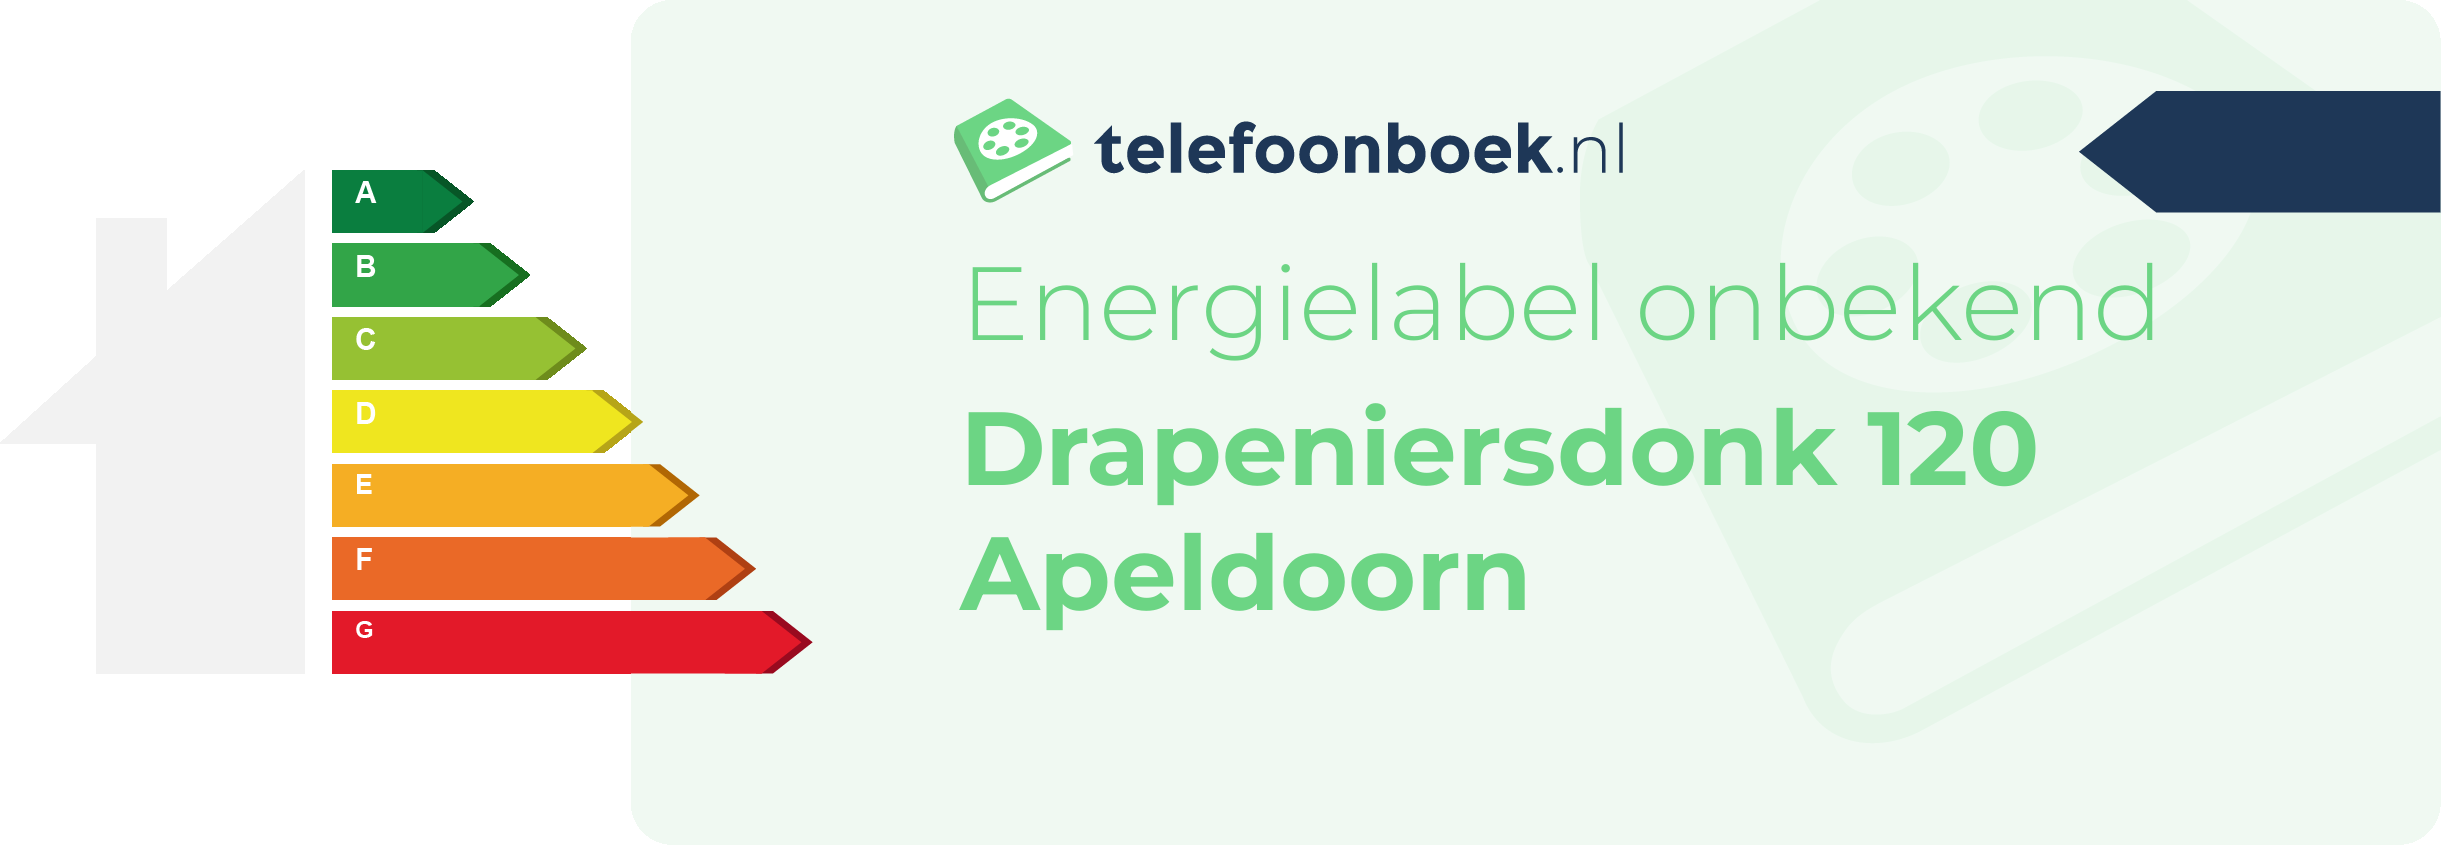 Energielabel Drapeniersdonk 120 Apeldoorn